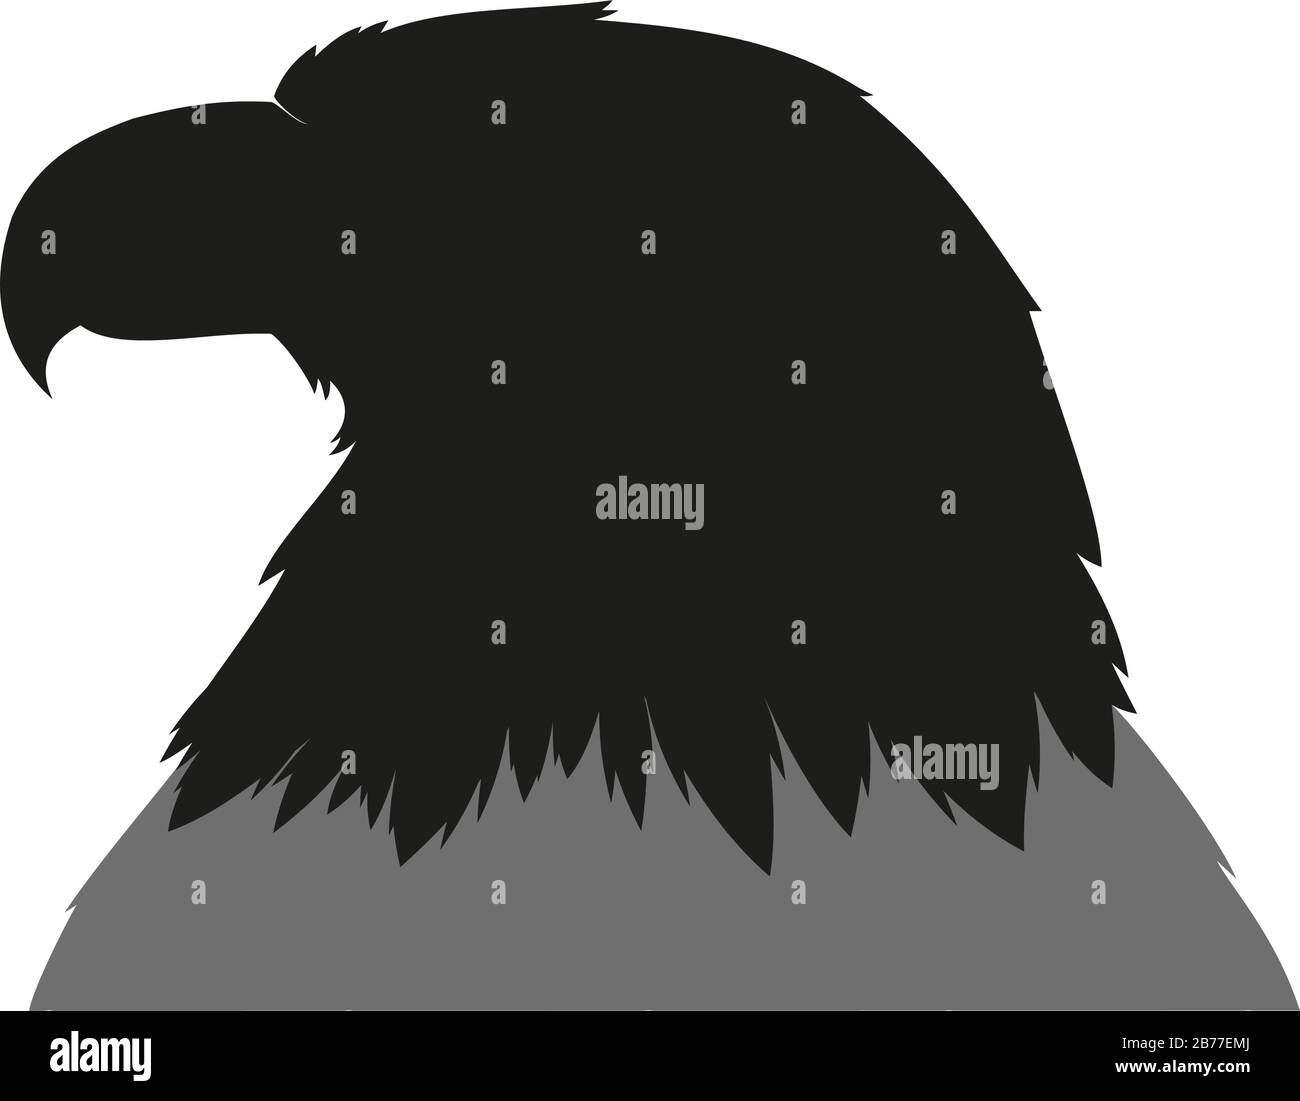 águila poderosa Imágenes vectoriales de stock - Alamy